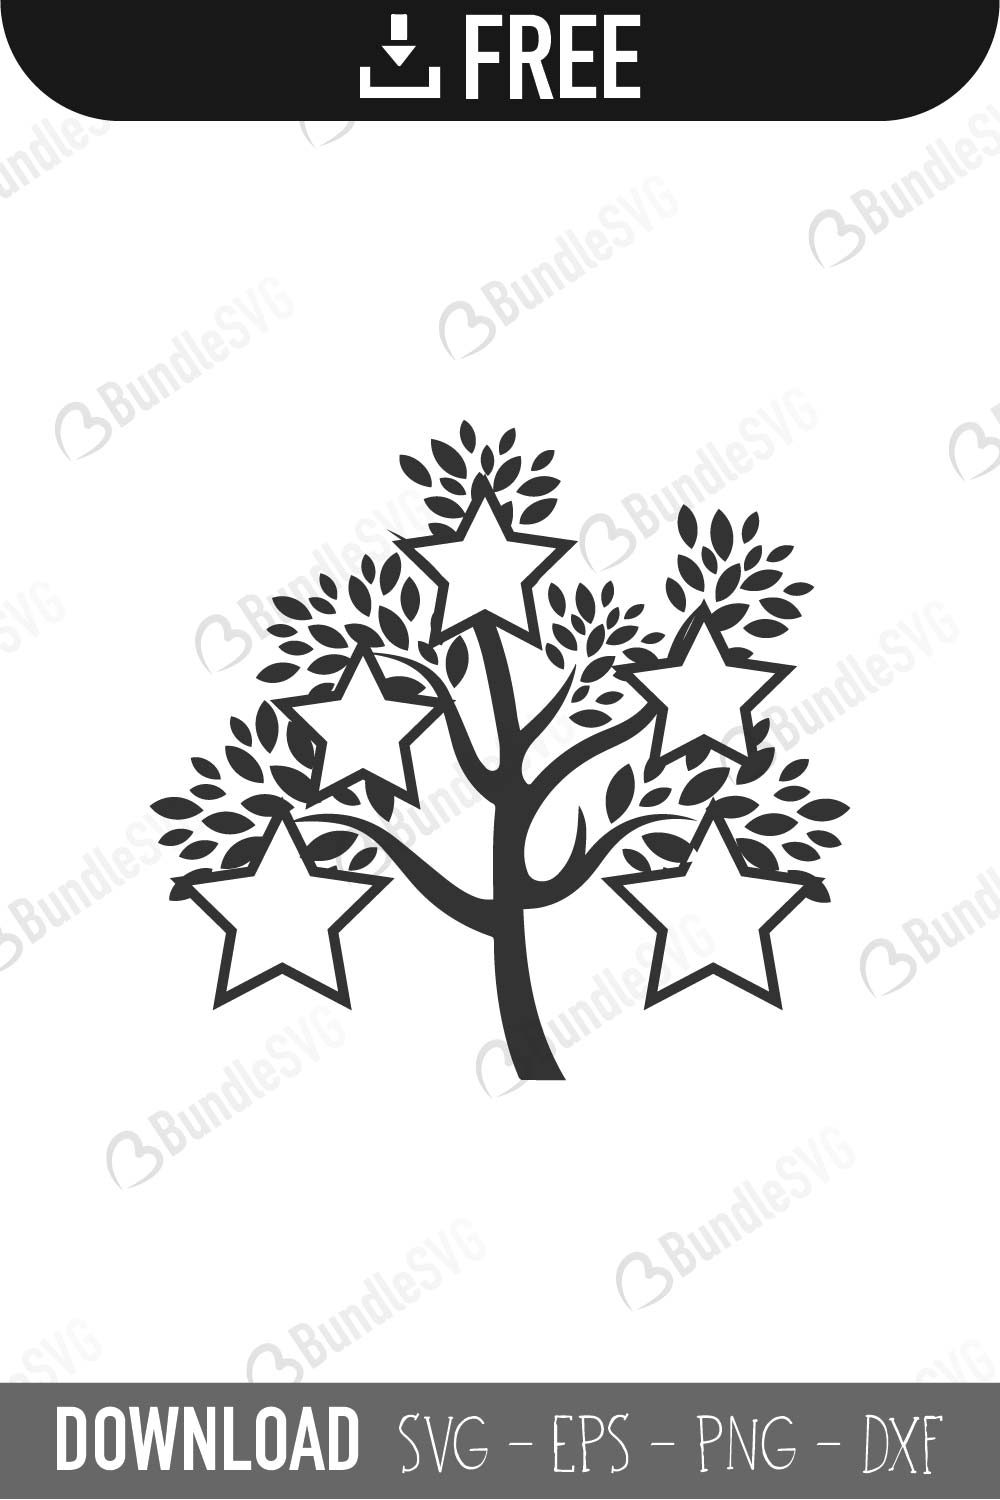 Download Family Tree SVG Cut Files Free Download | BundleSVG.com